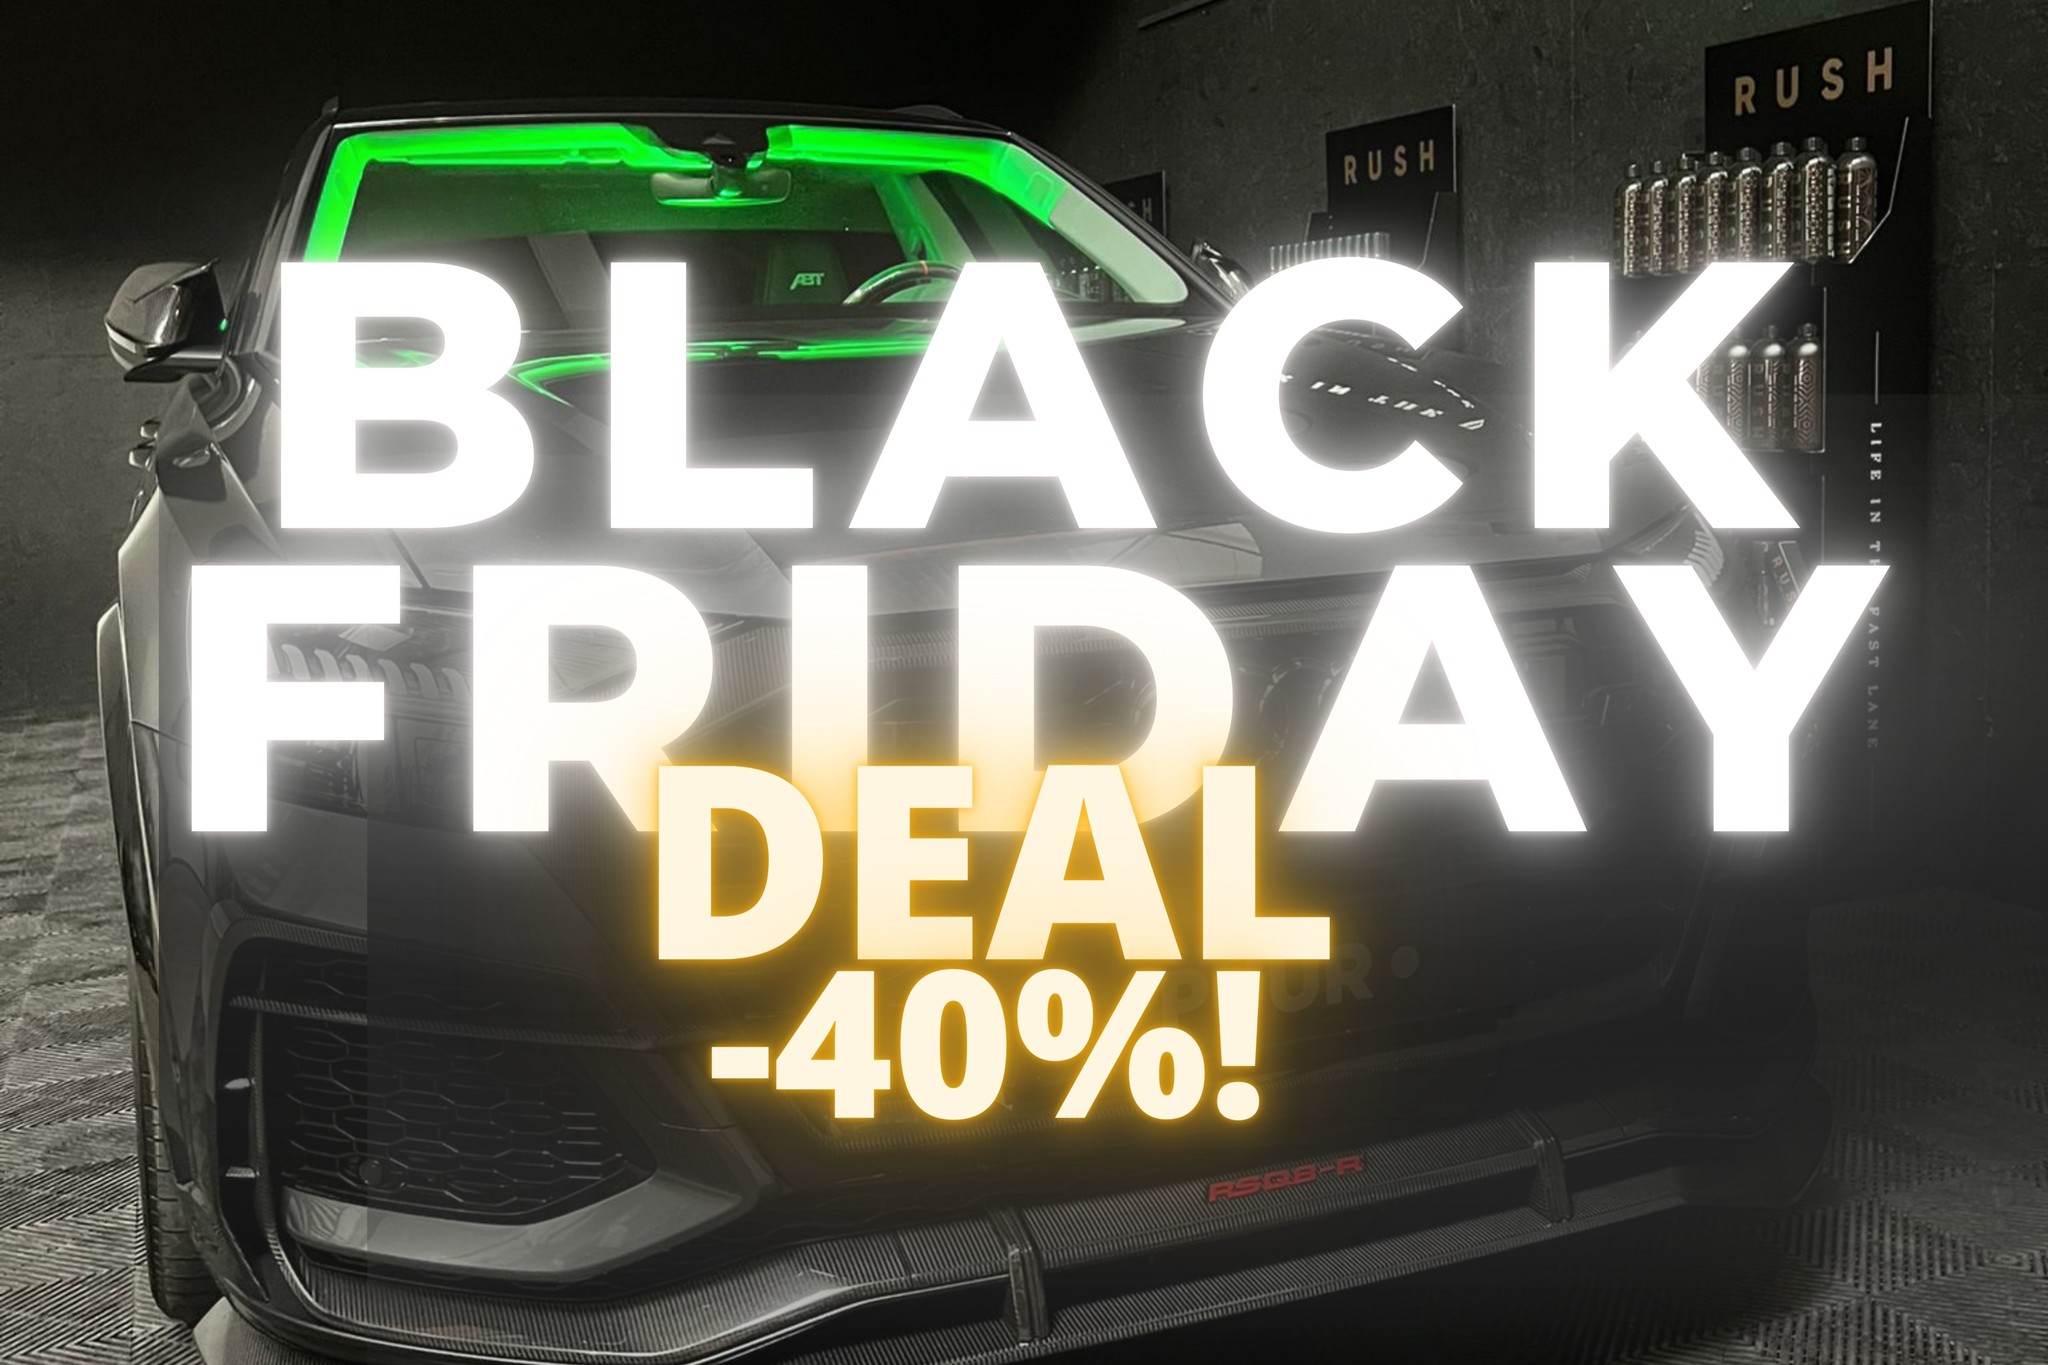 -40% Black Friday DEAL!